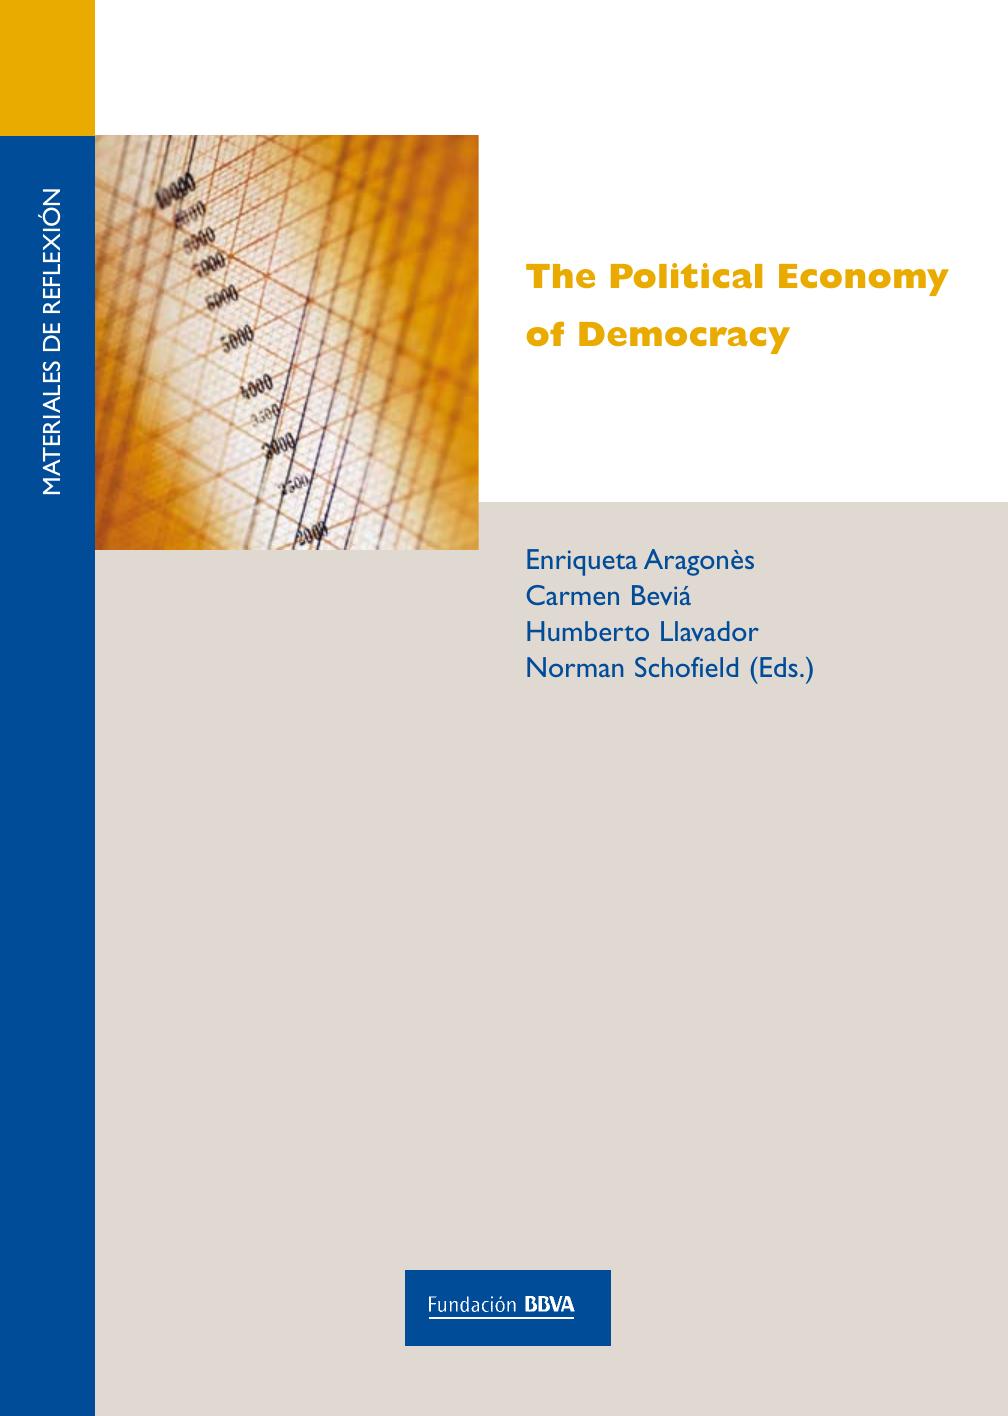 The Political Economy of Democracy